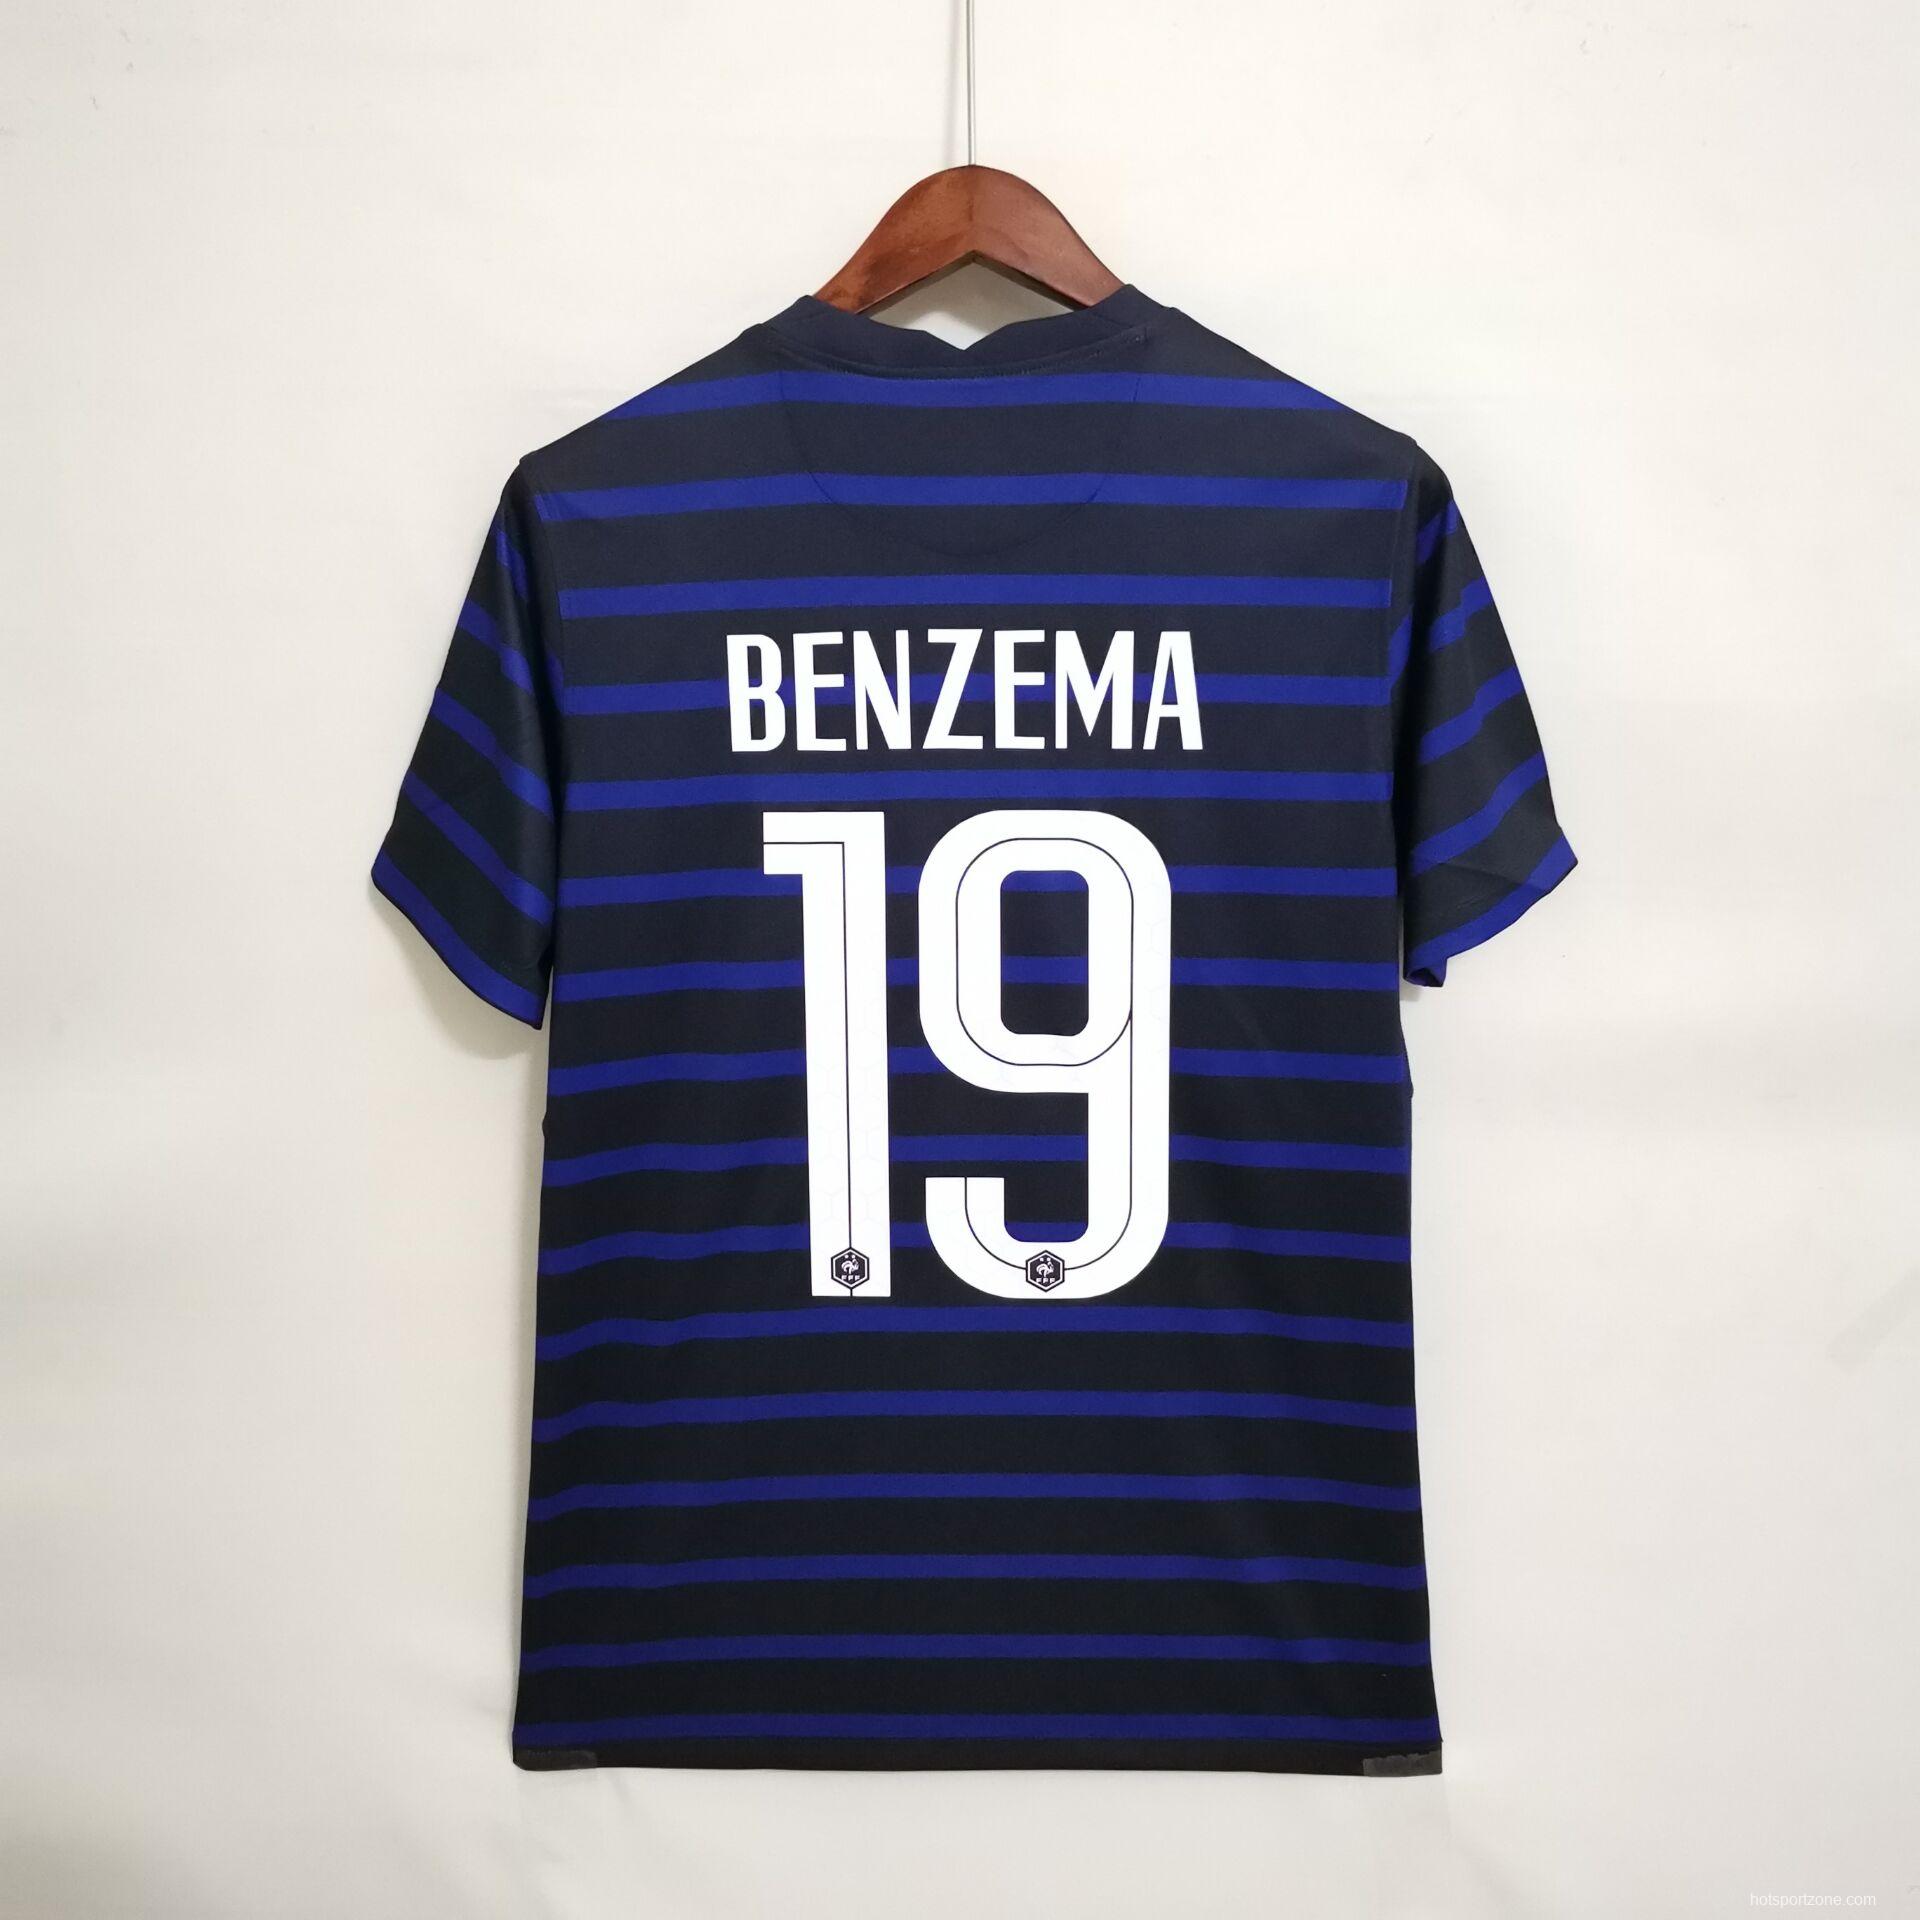 Retro 2020 France Benzema Jersey